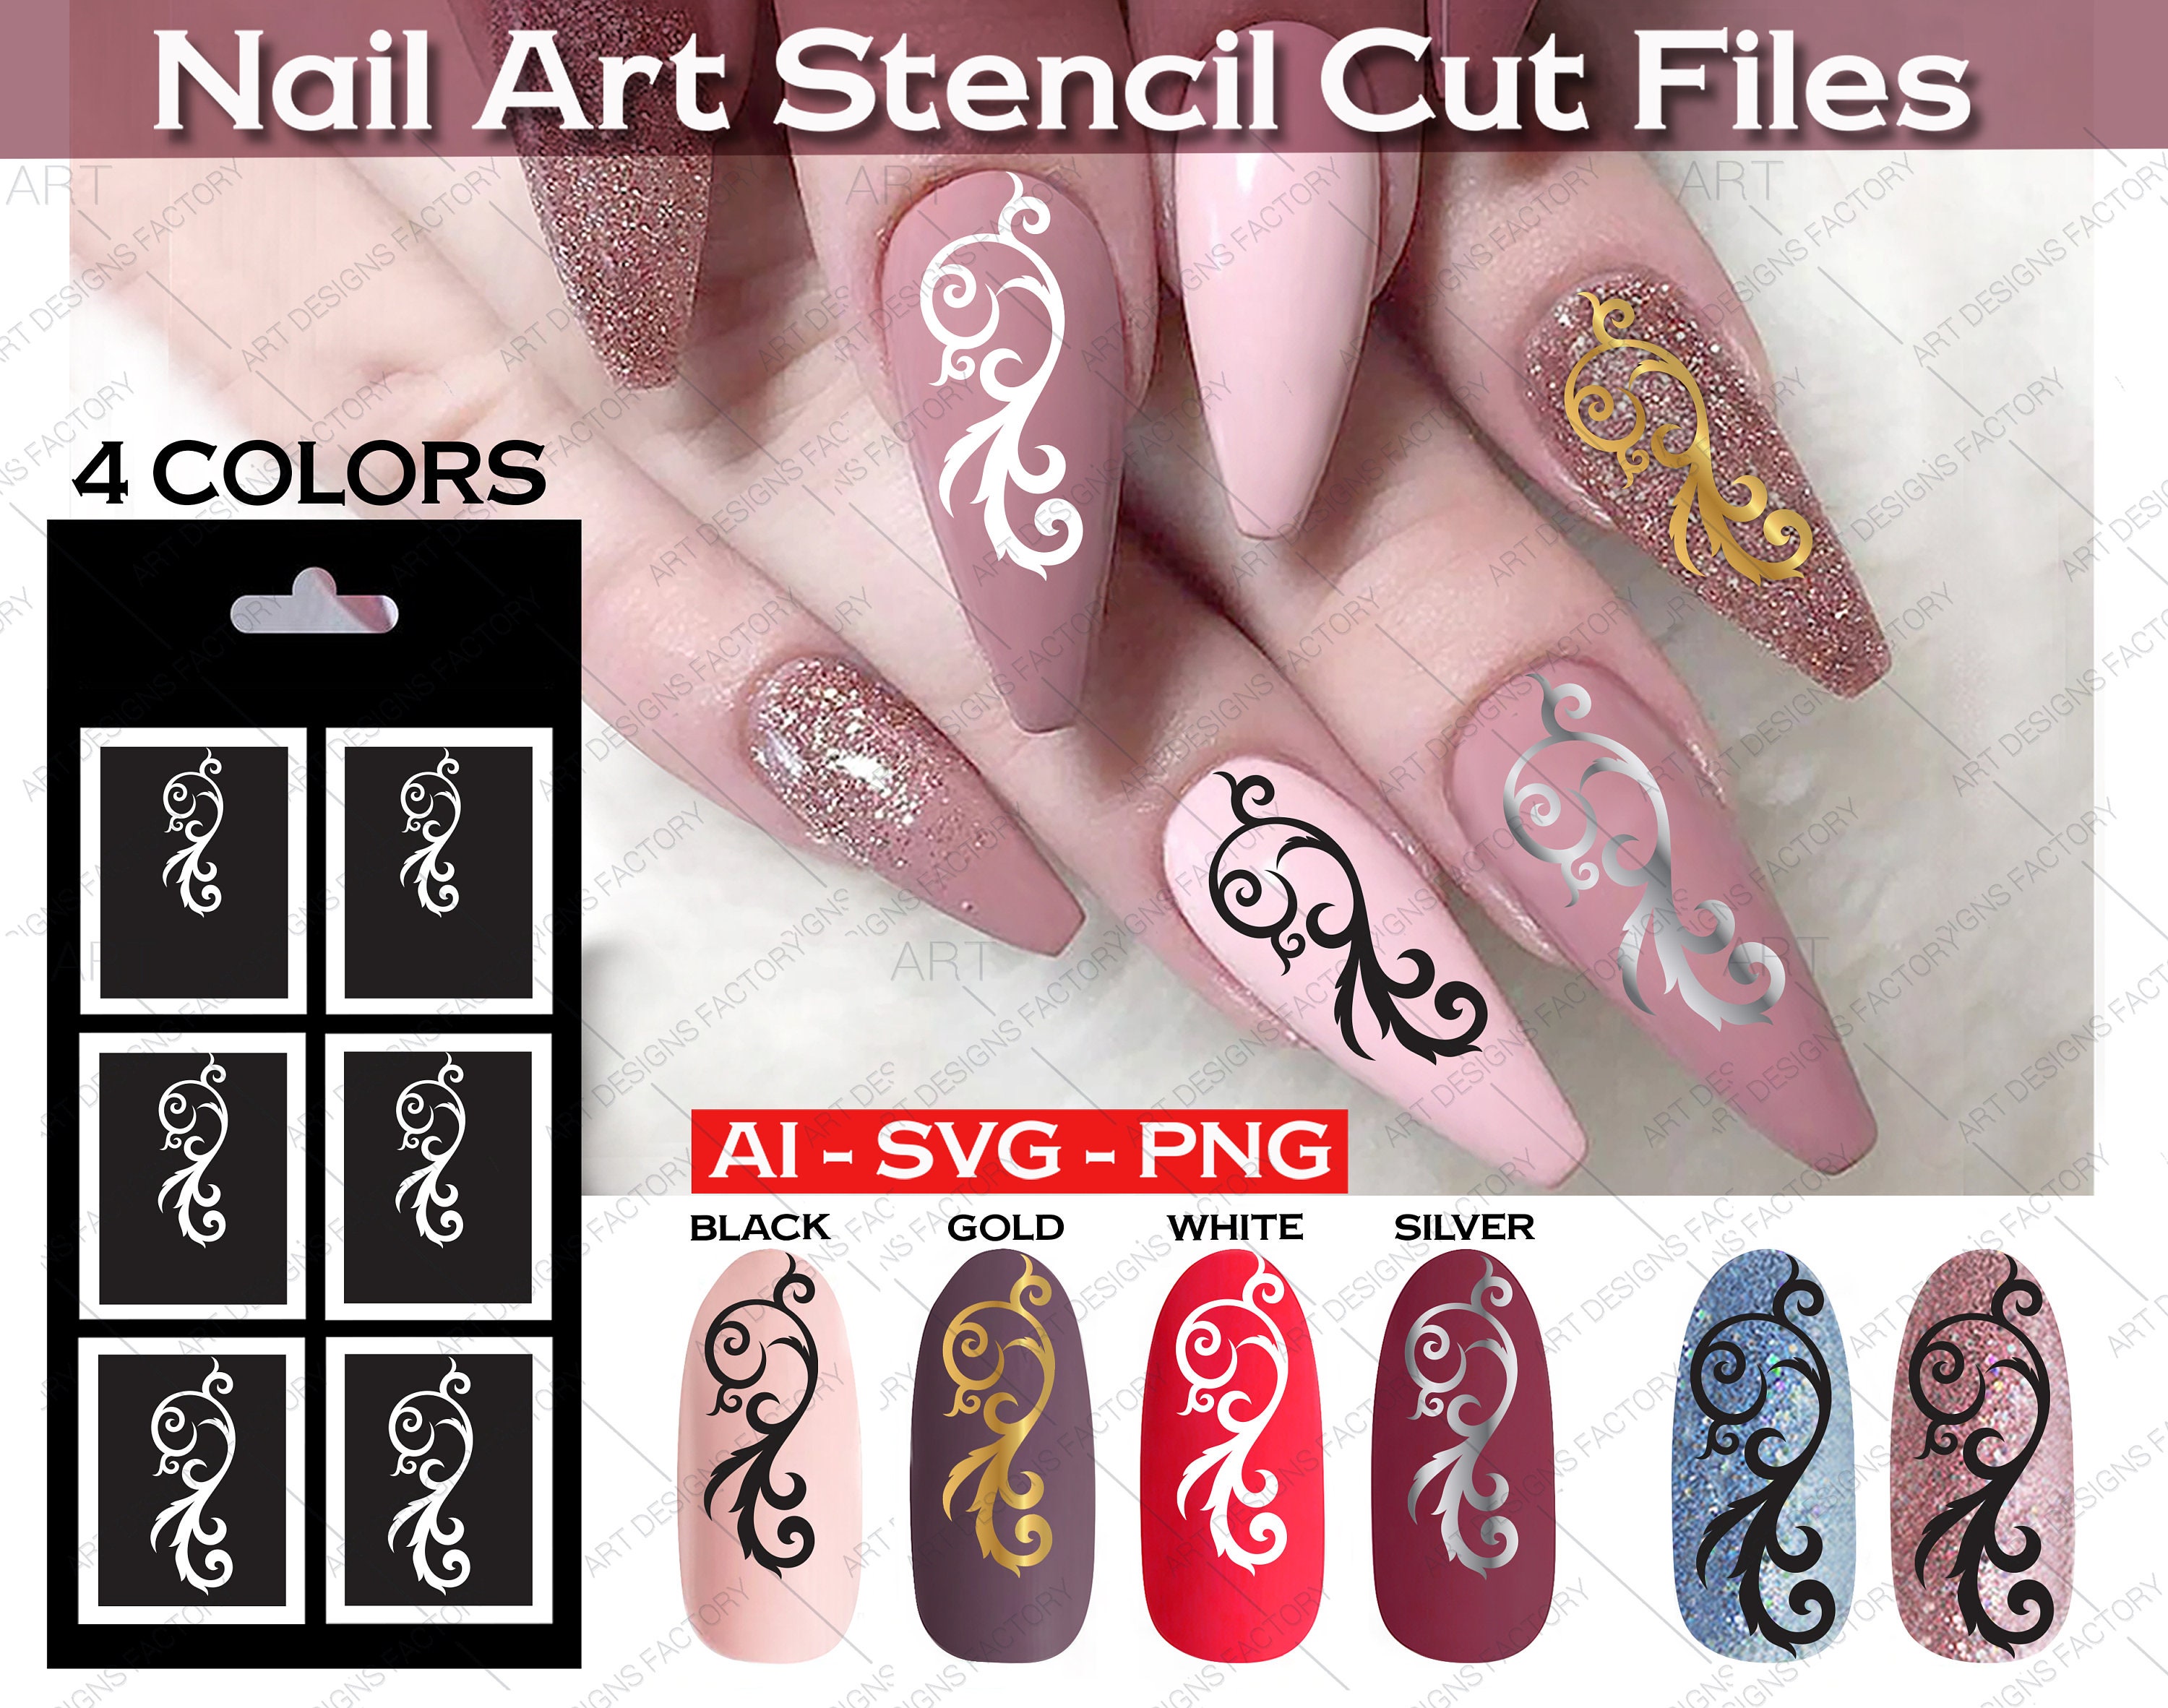 6. Stencil Designs for Nails - wide 3